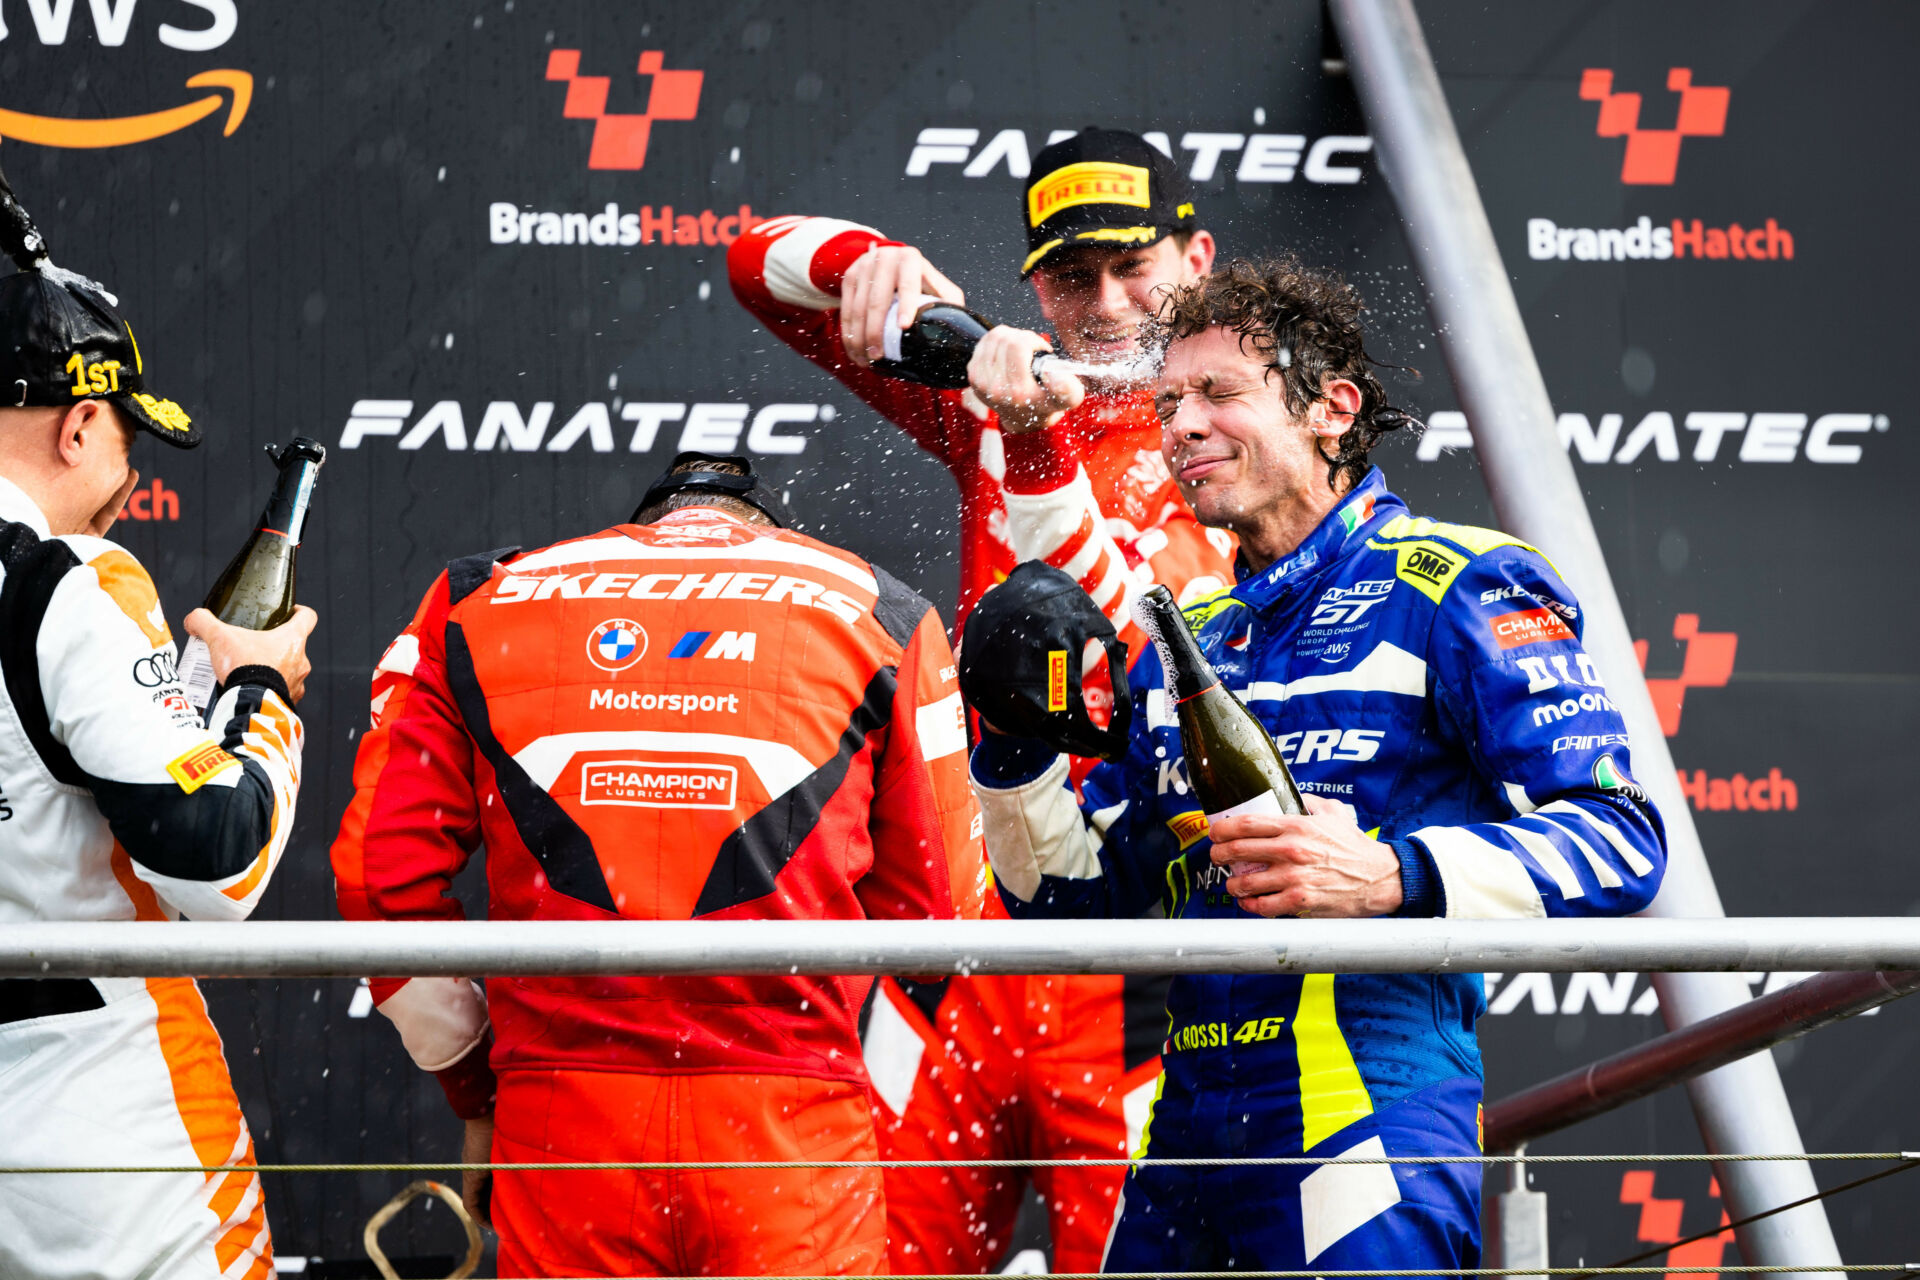 Valentino Rossi On Fanatec GT Podium At Manufacturers Hatch ...